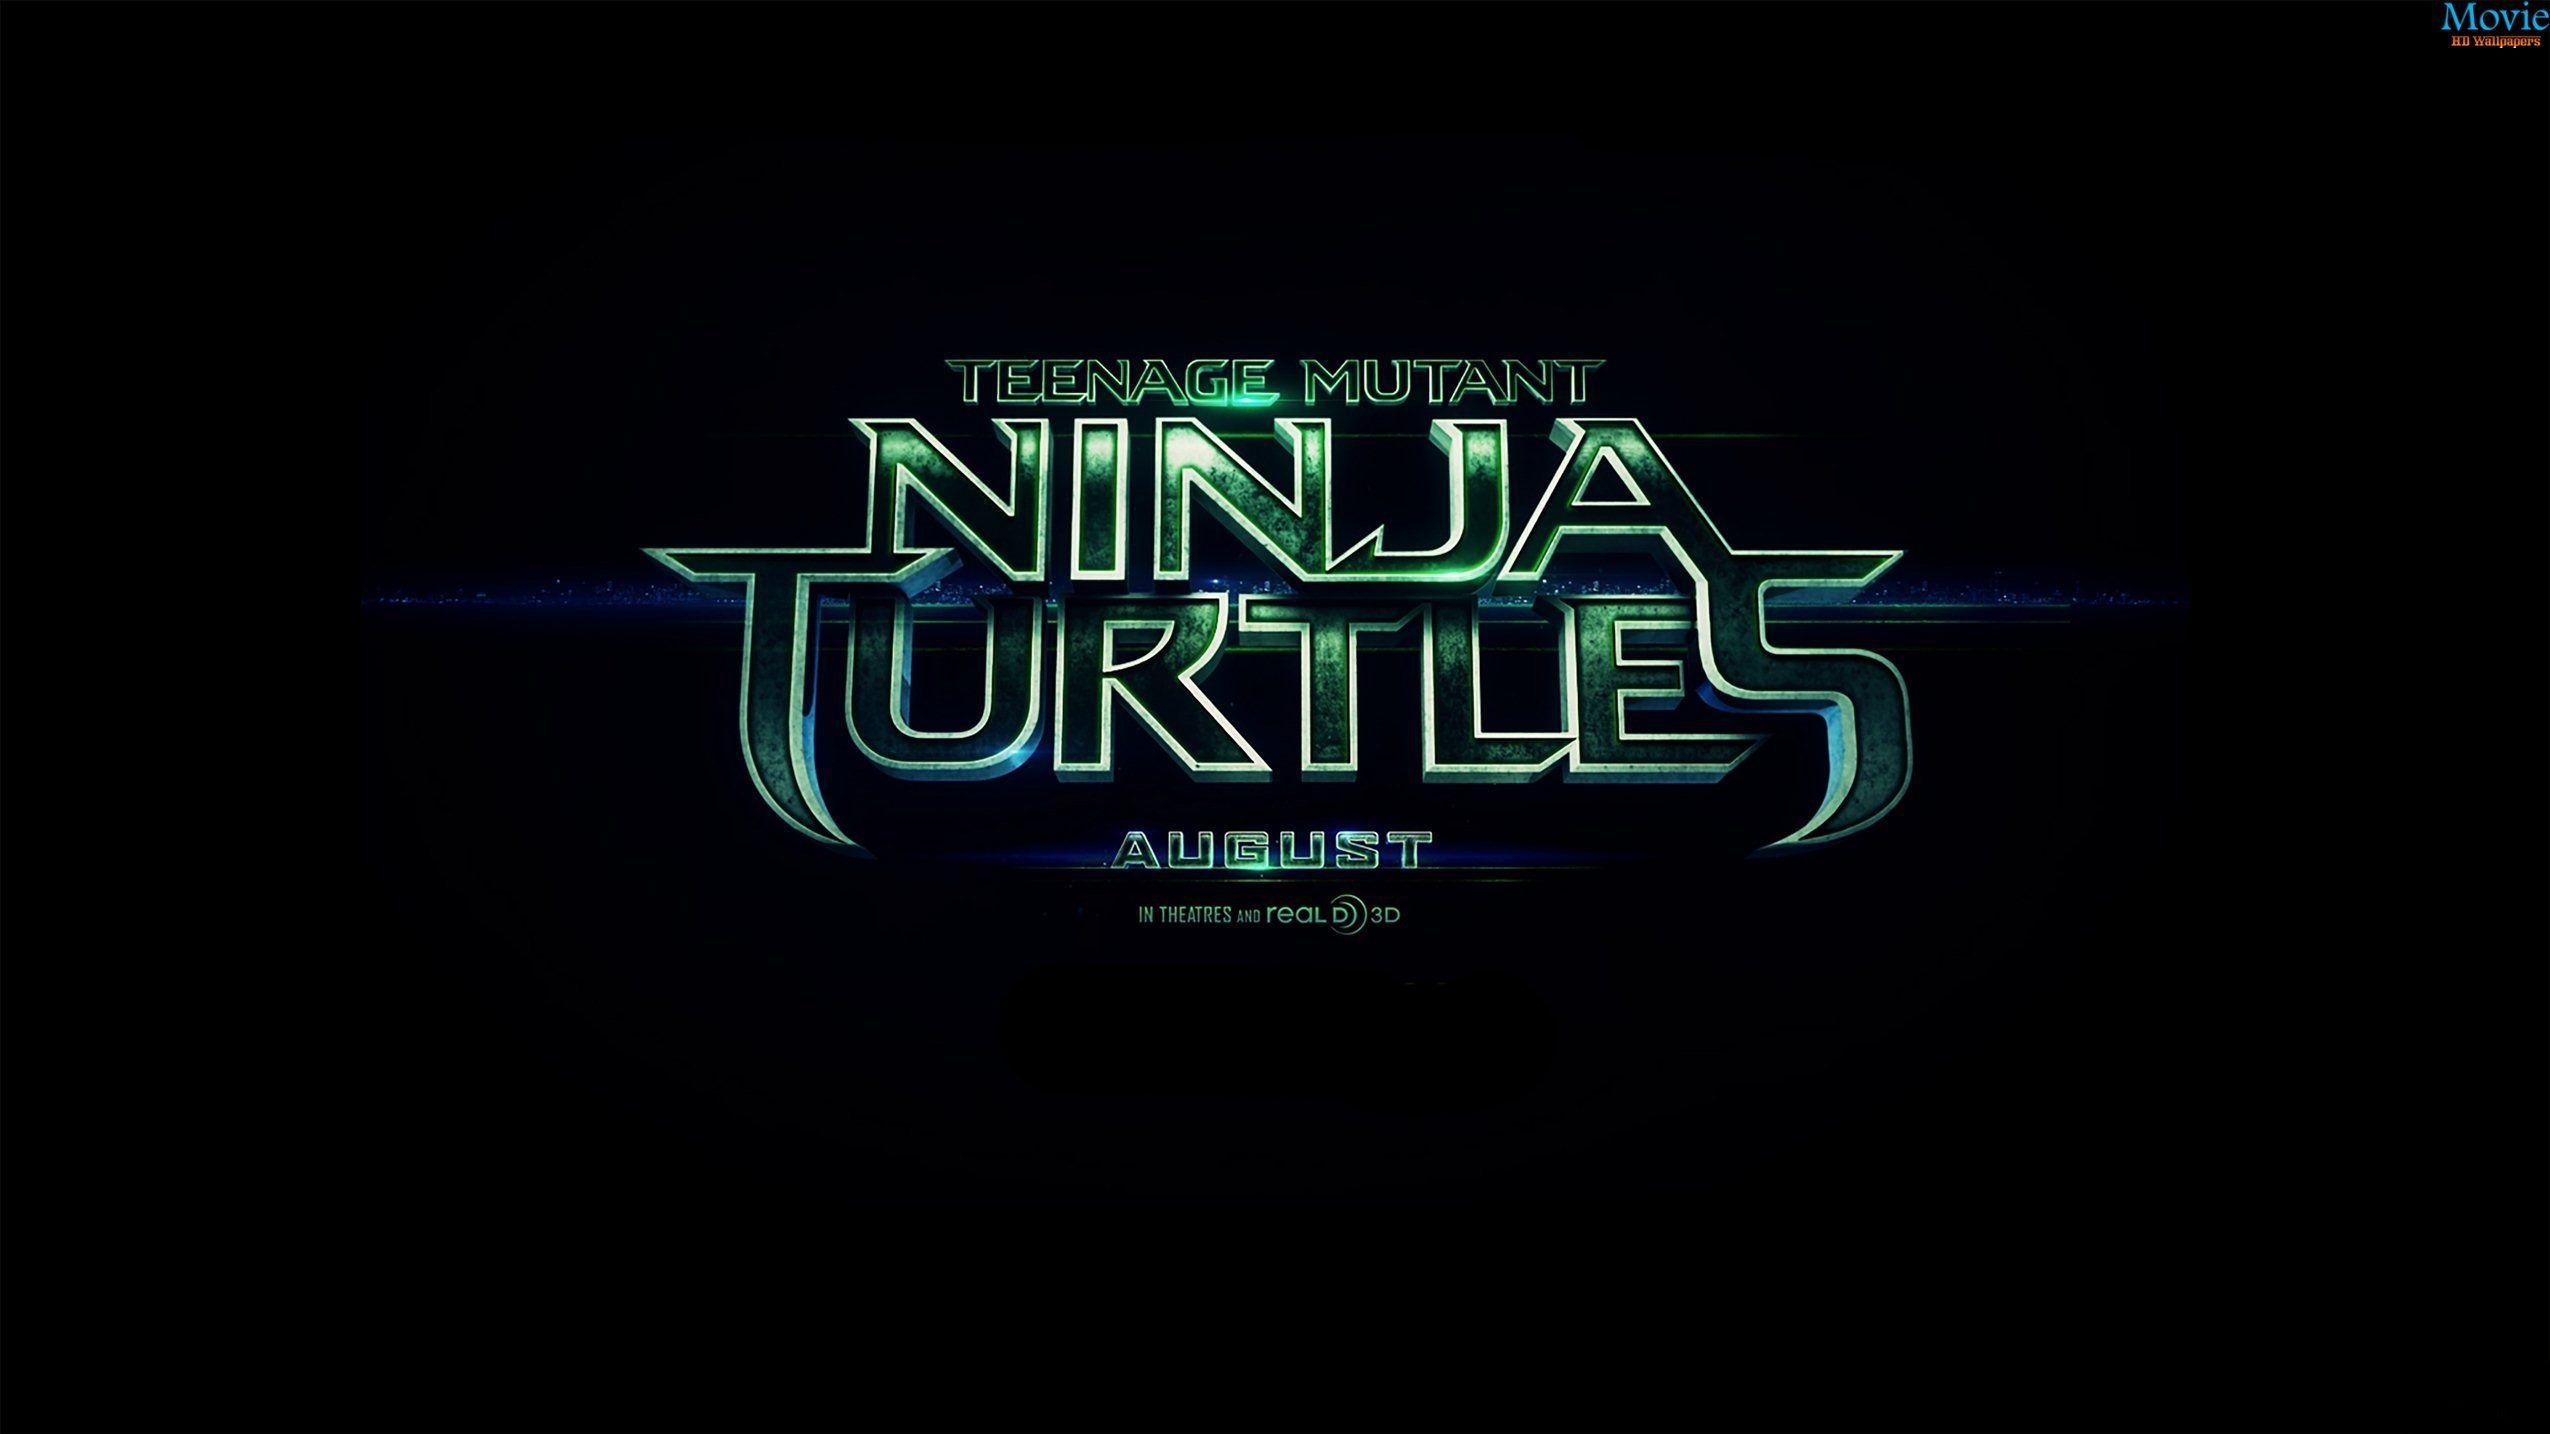 Teenage Mutant Ninja Turtles (2014 film) HD Wallpaper